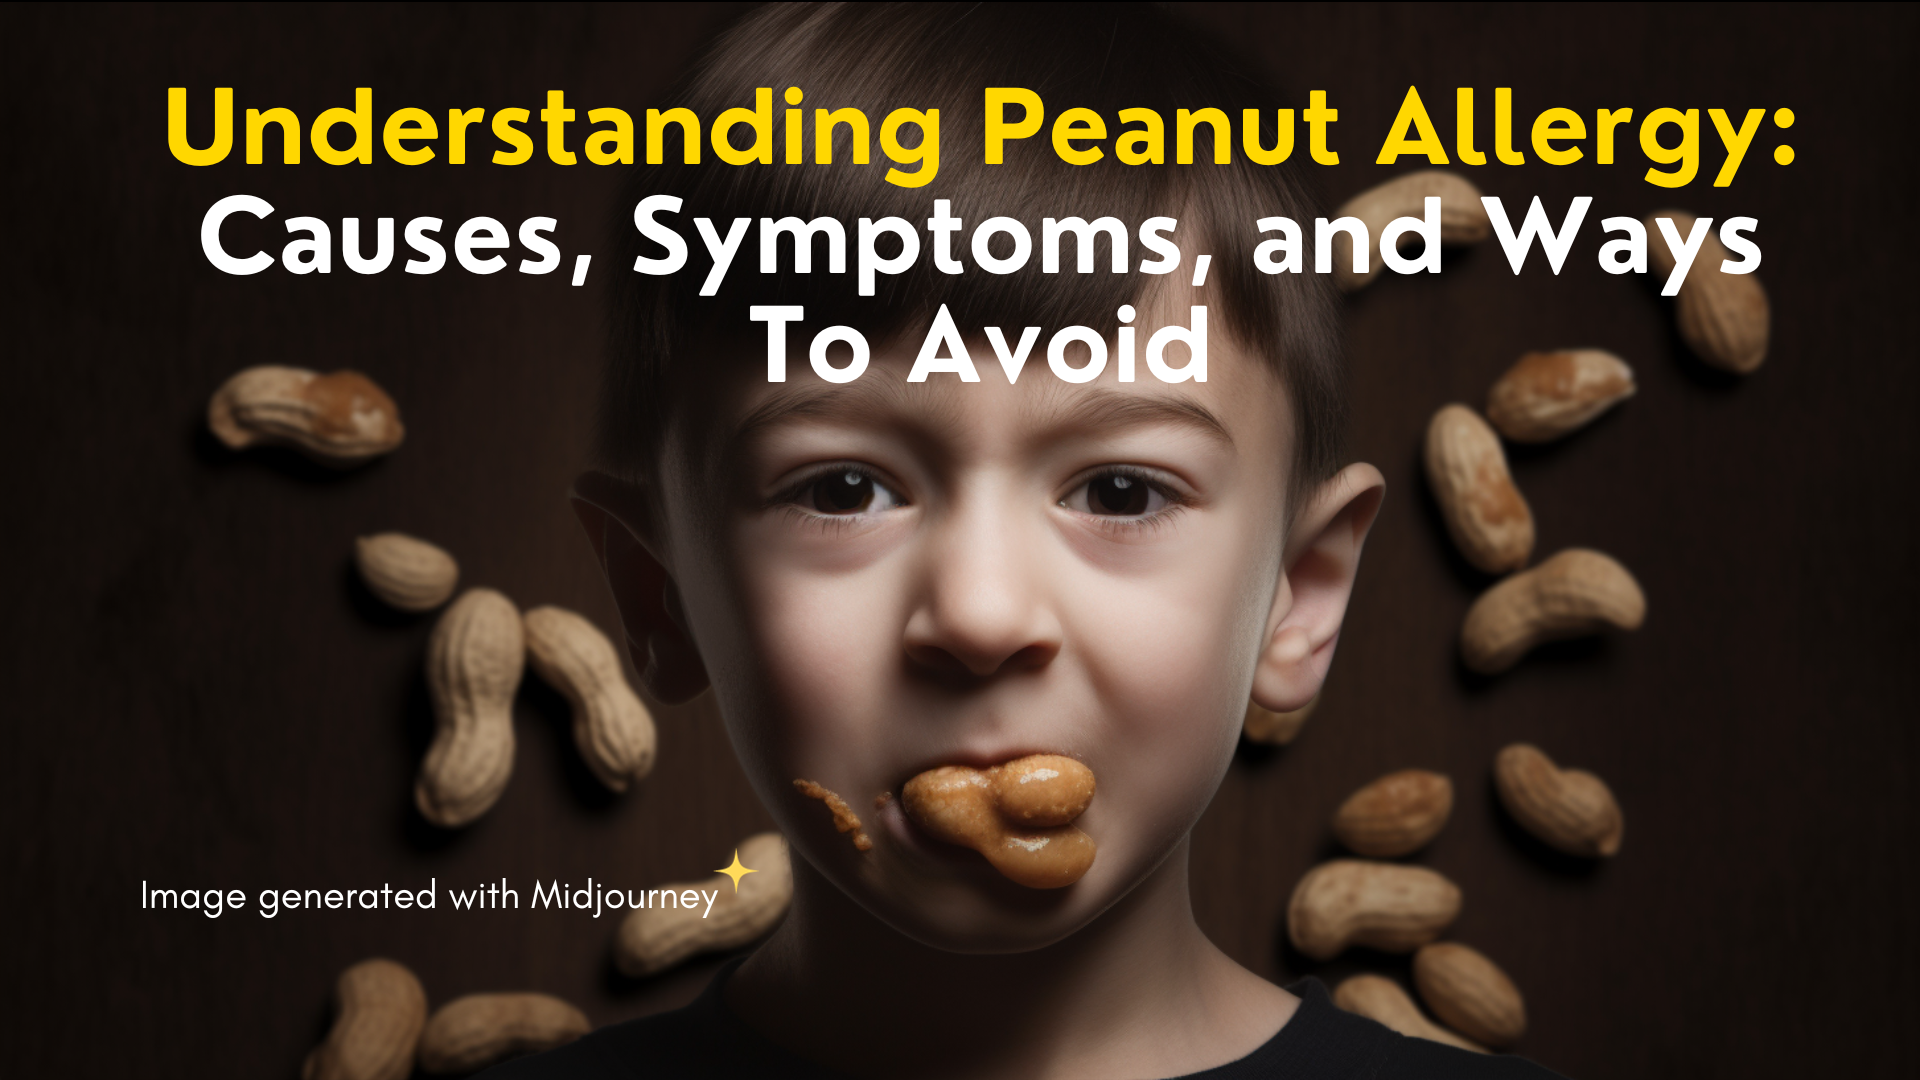 Peanut allergy blog